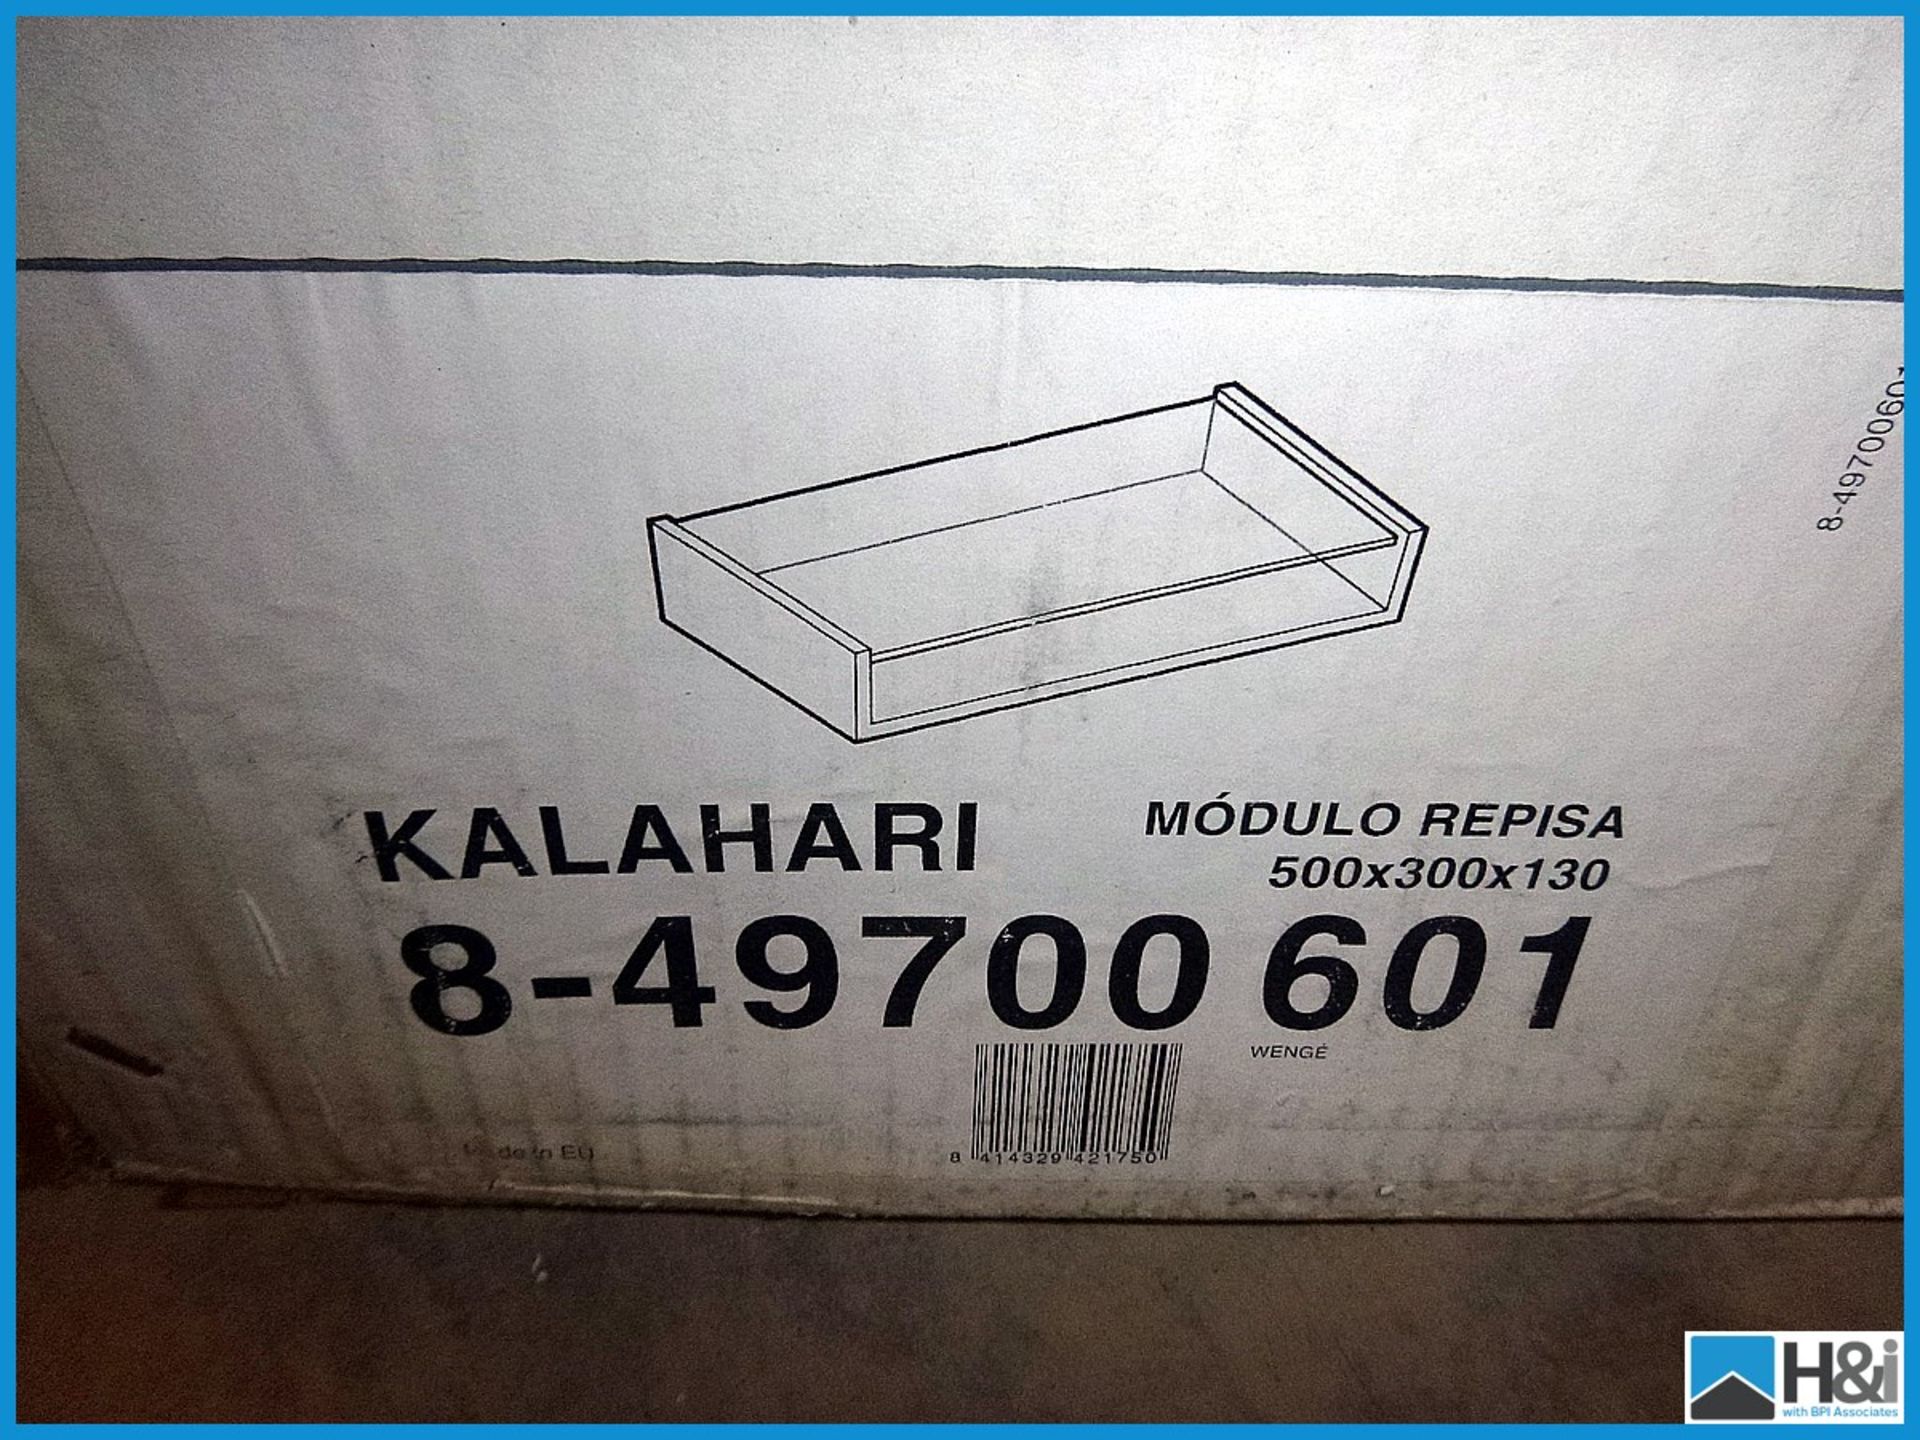 Roca Kalahari Modular Unit 500mm x 300mm x 130mm RRP £180 Appraisal: Viewing Essential Serial No: NA - Image 2 of 2